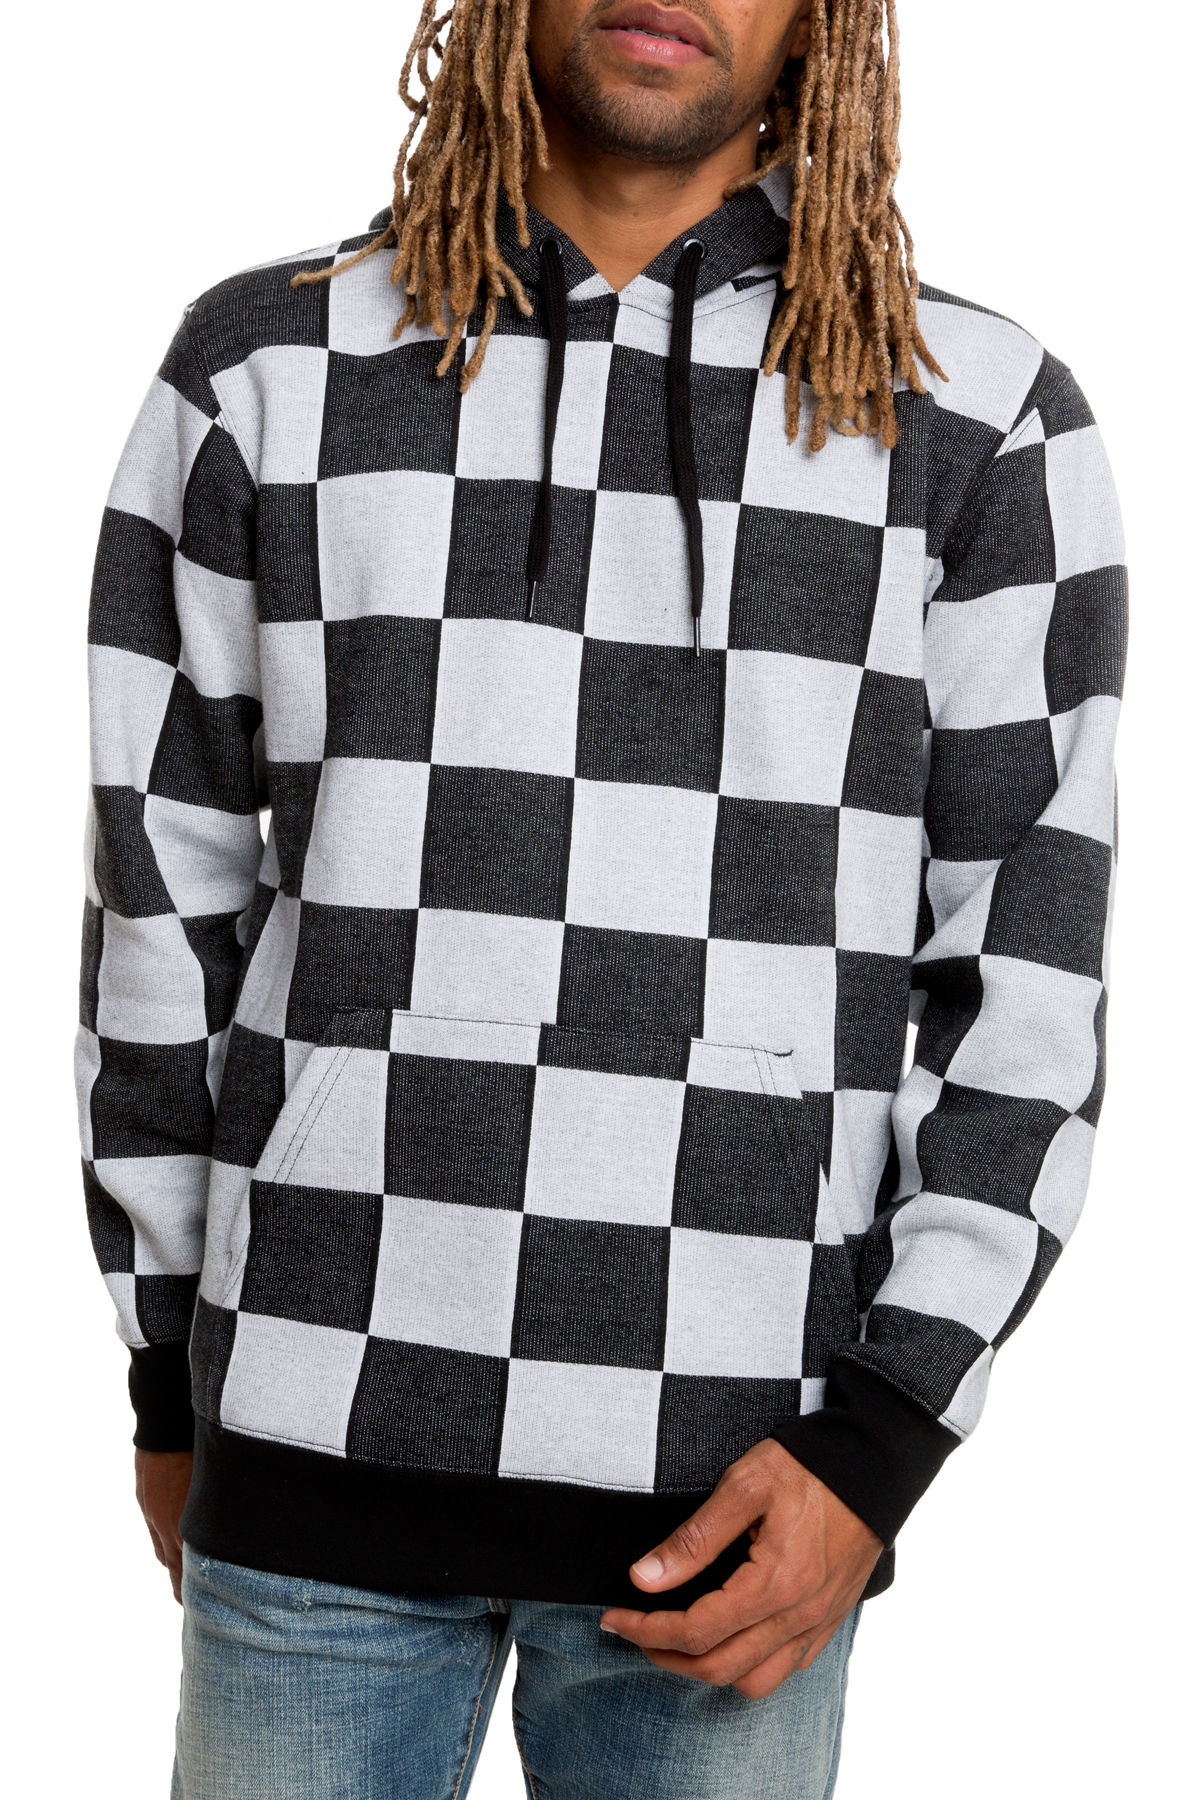 vans black and white checkered hoodie